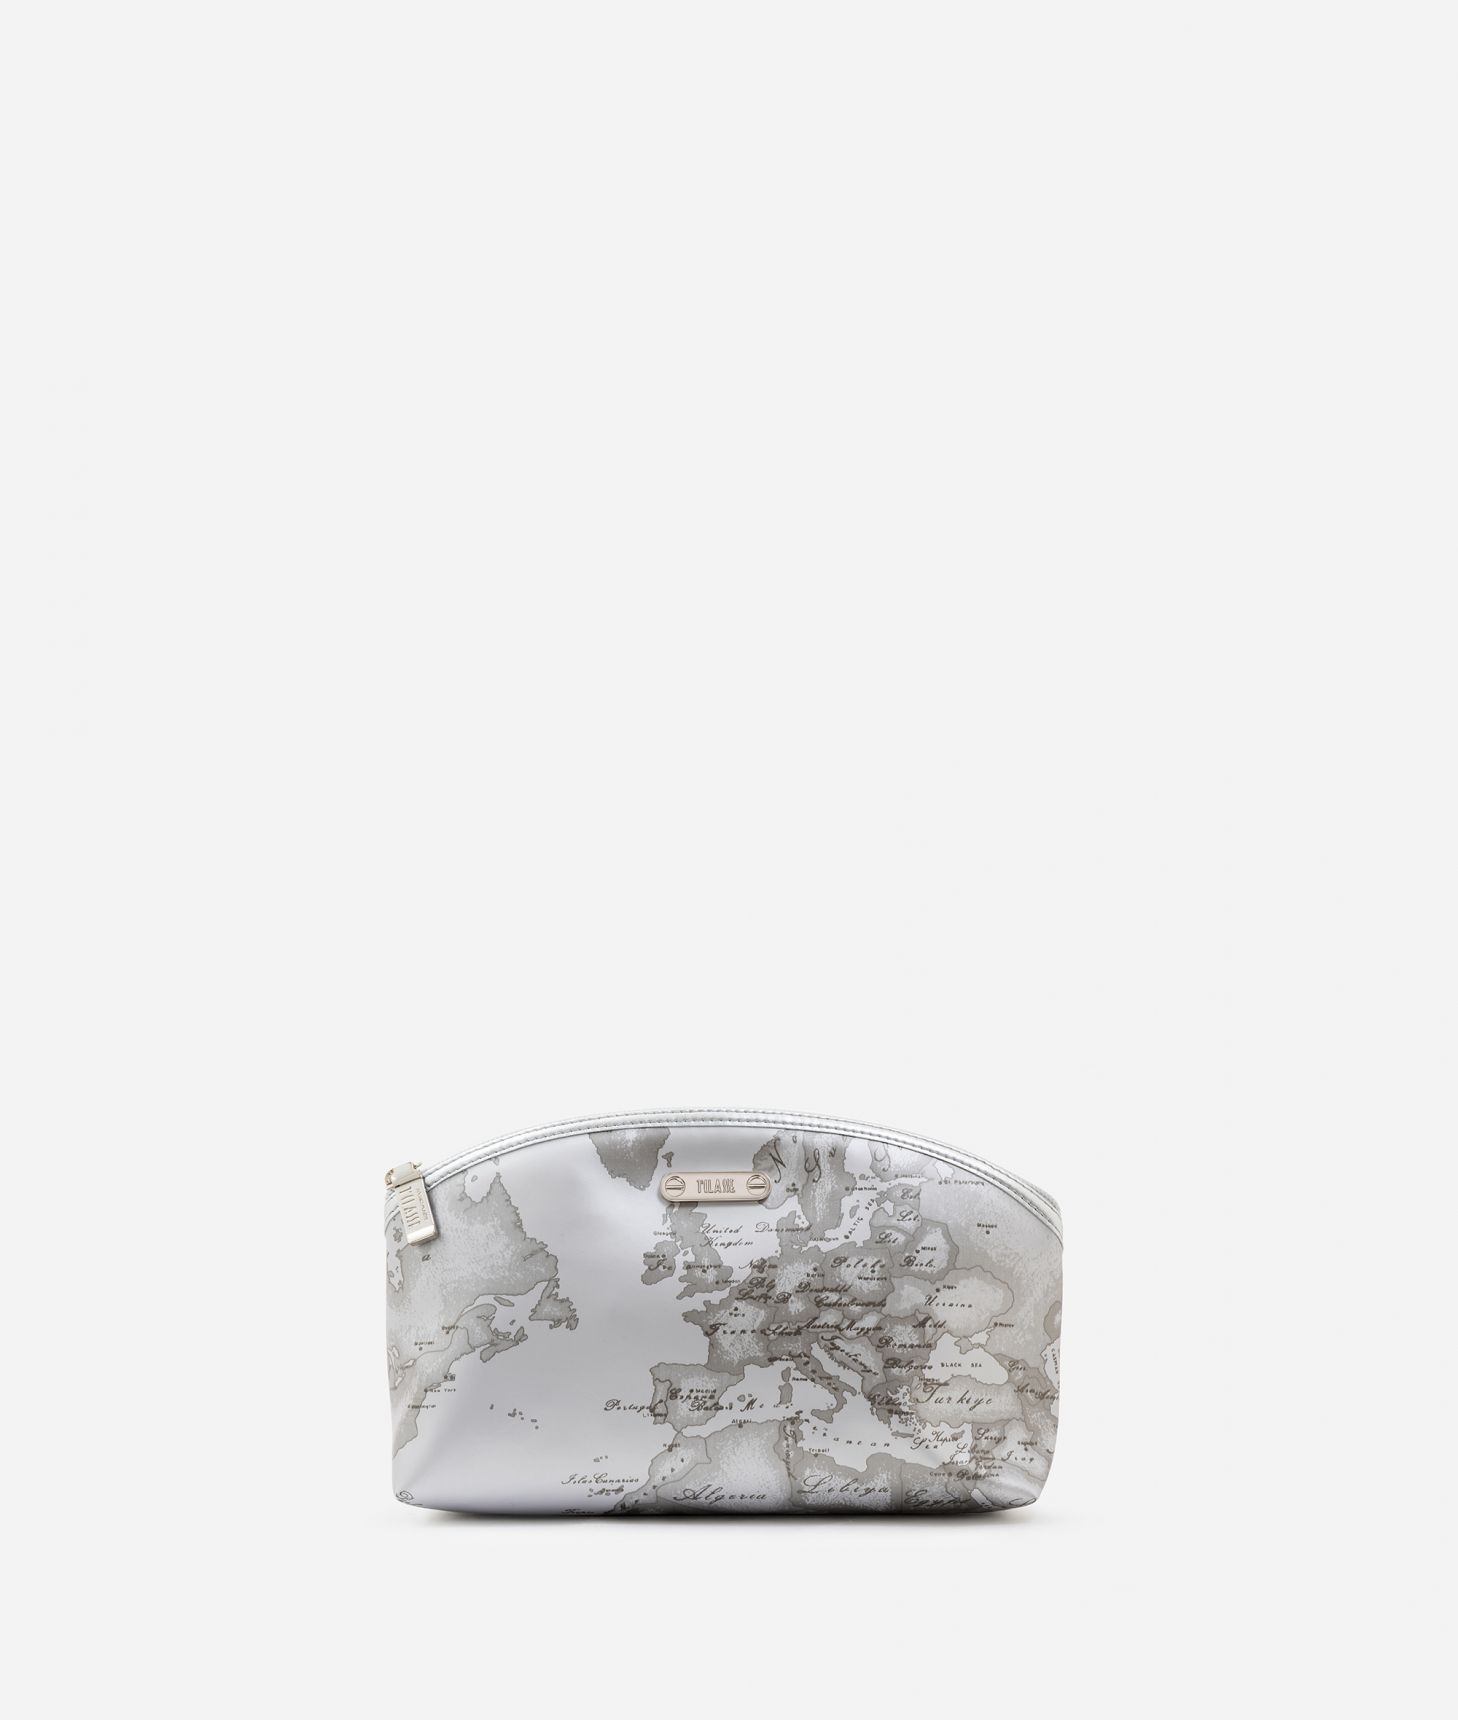 Medium beauty case in pearl grey rubberized fabric,front